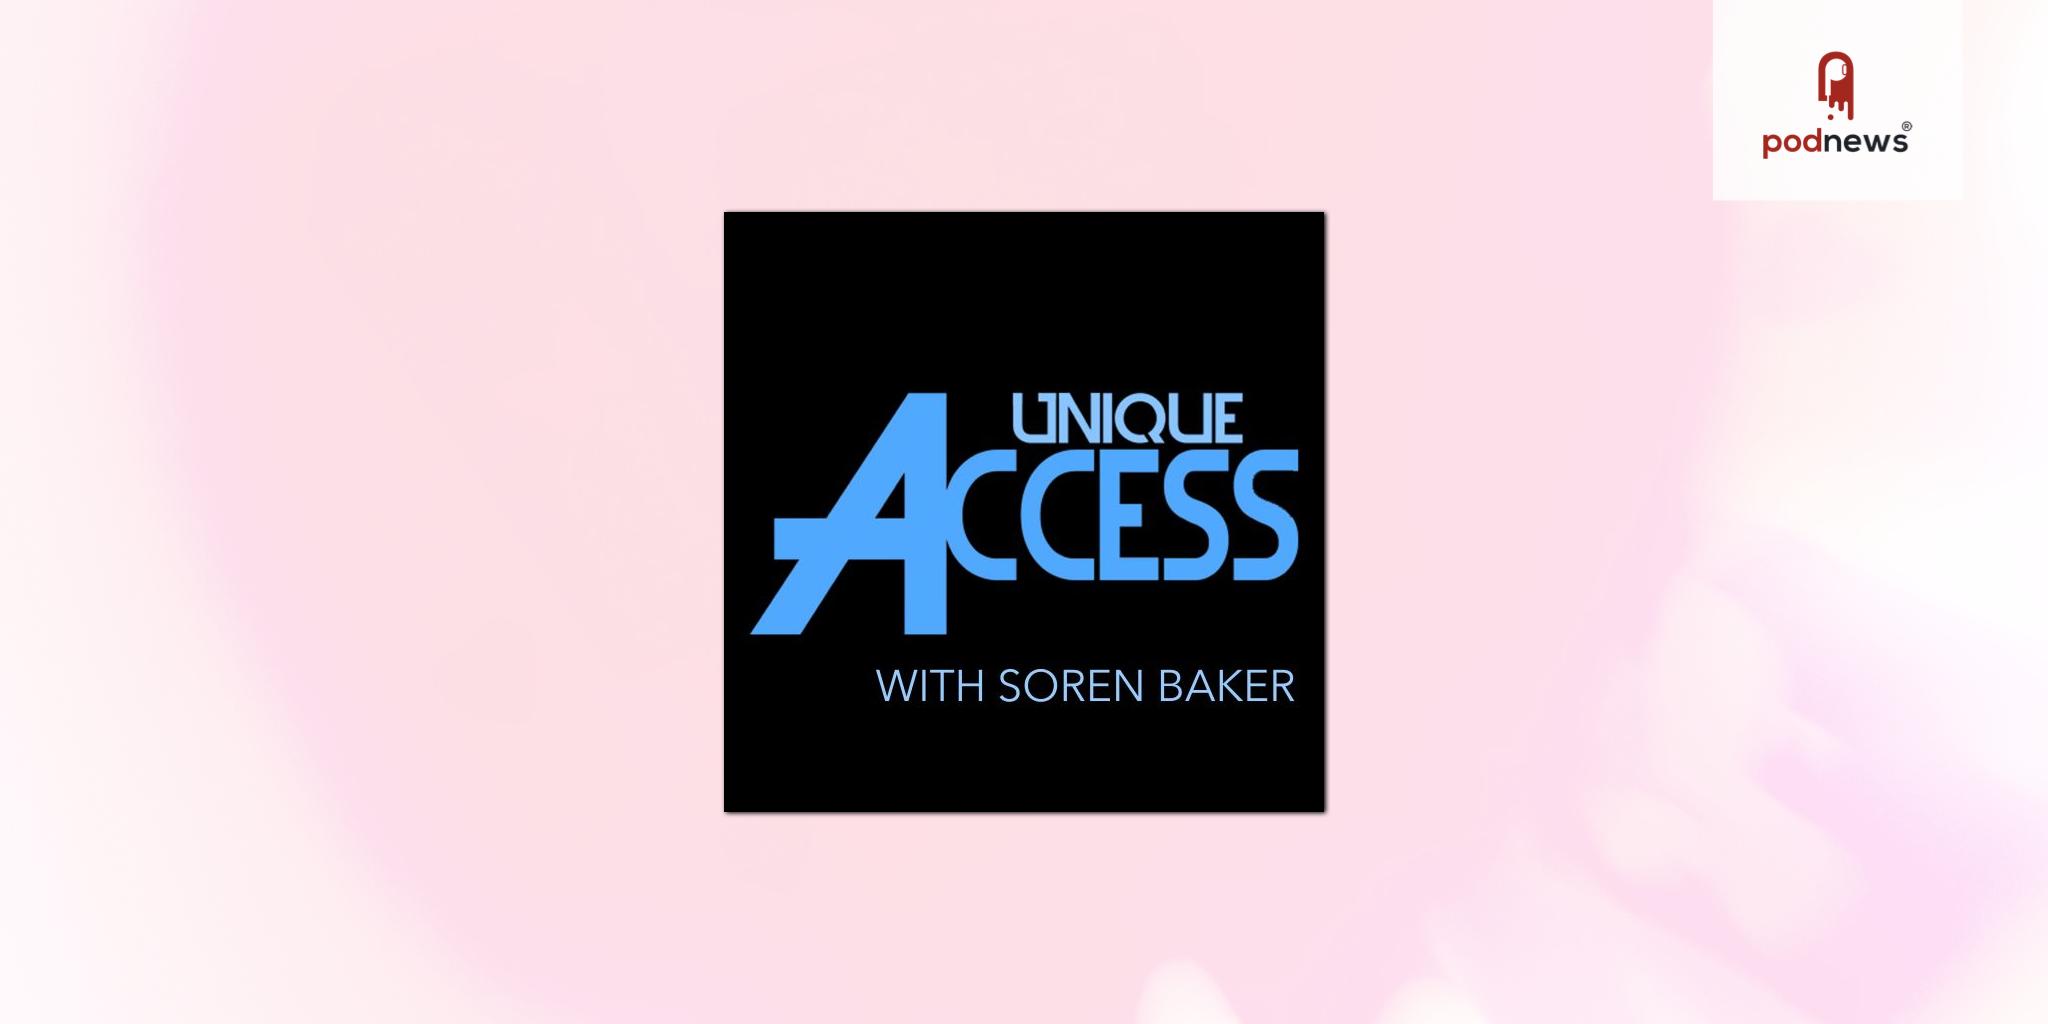 Unique Access with Soren Baker Podcast launches